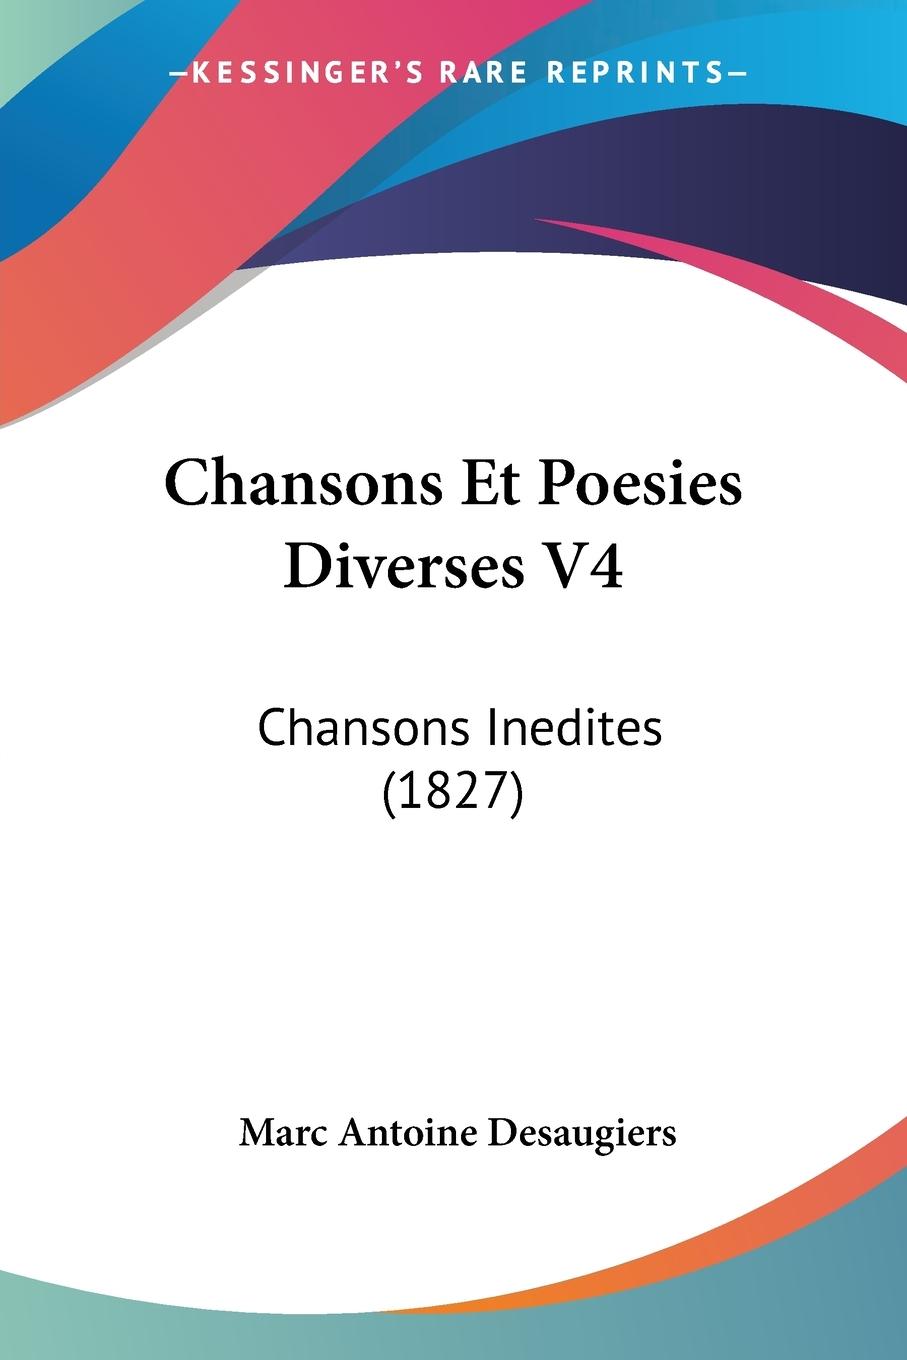 Chansons Et Poesies Diverses V4 / Chansons Inedites (1827) / Marc Antoine Desaugiers / Taschenbuch / Paperback / Französisch / 2010 / Kessinger Publishing, LLC / EAN 9781160338325 - Desaugiers, Marc Antoine